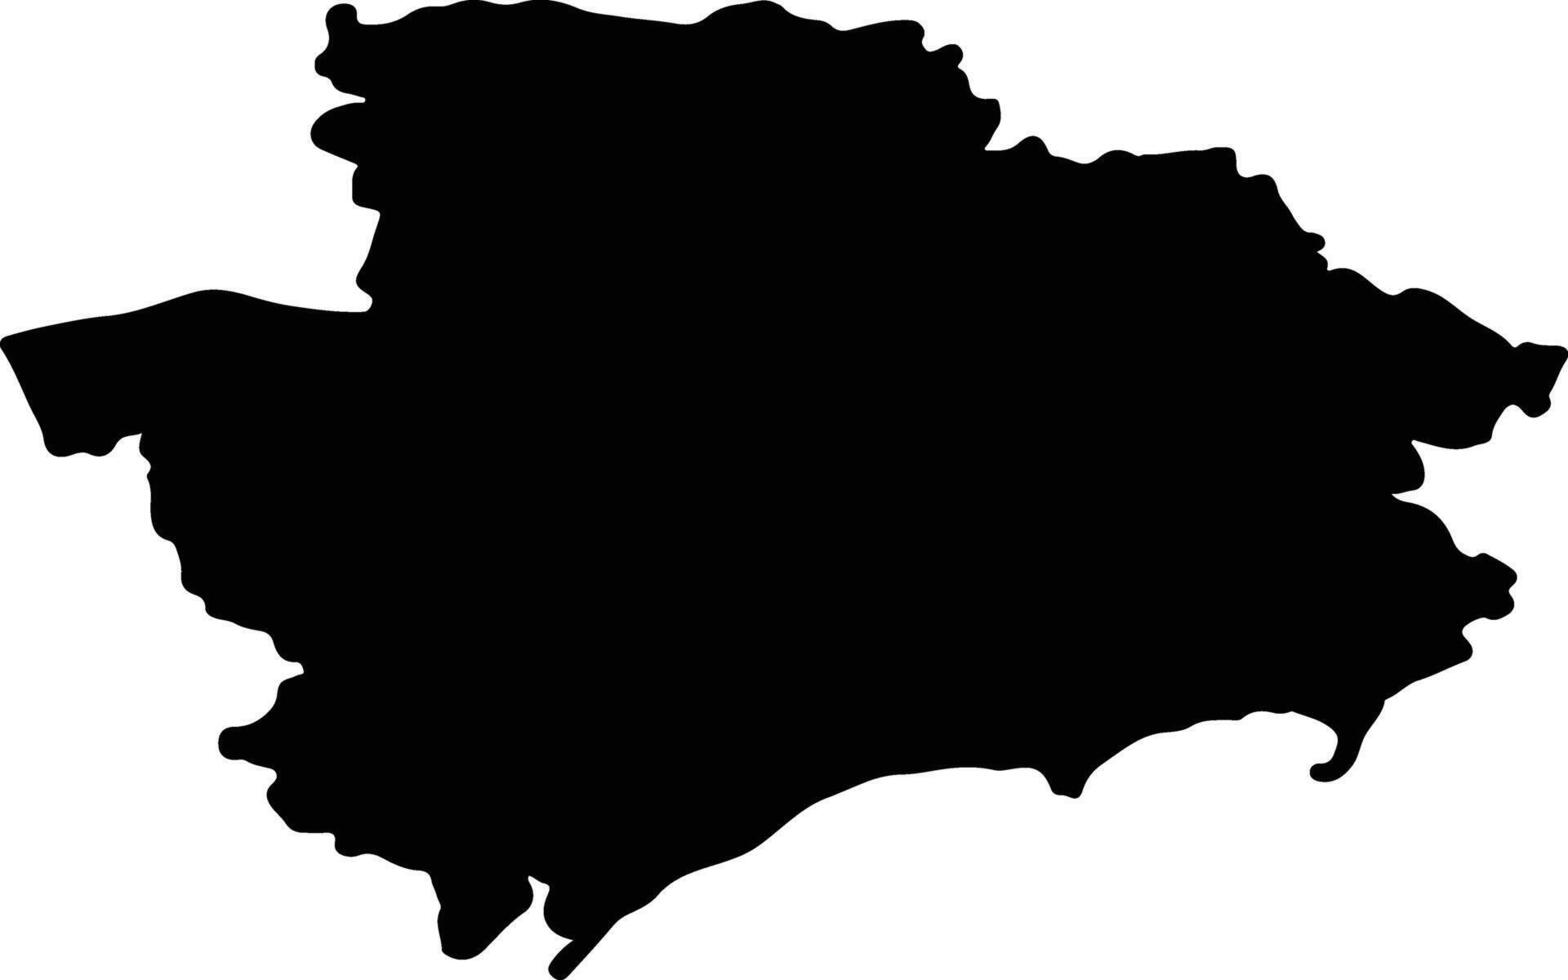 zaporizhzhya Ucrania silueta mapa vector